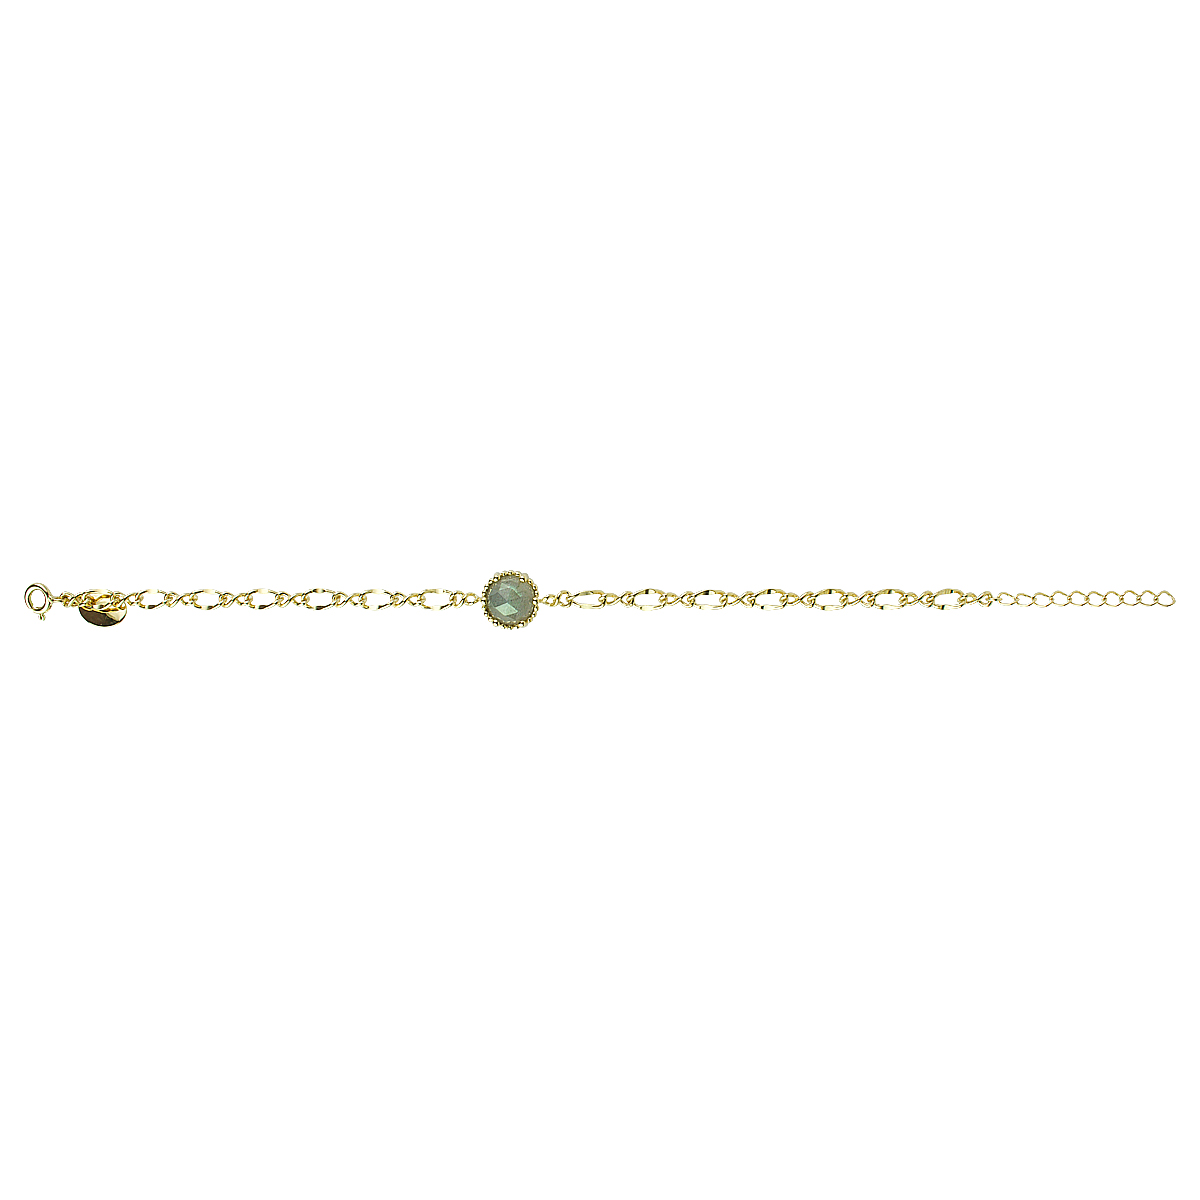 Sputnik Jewelry - Bracelet Labradorite